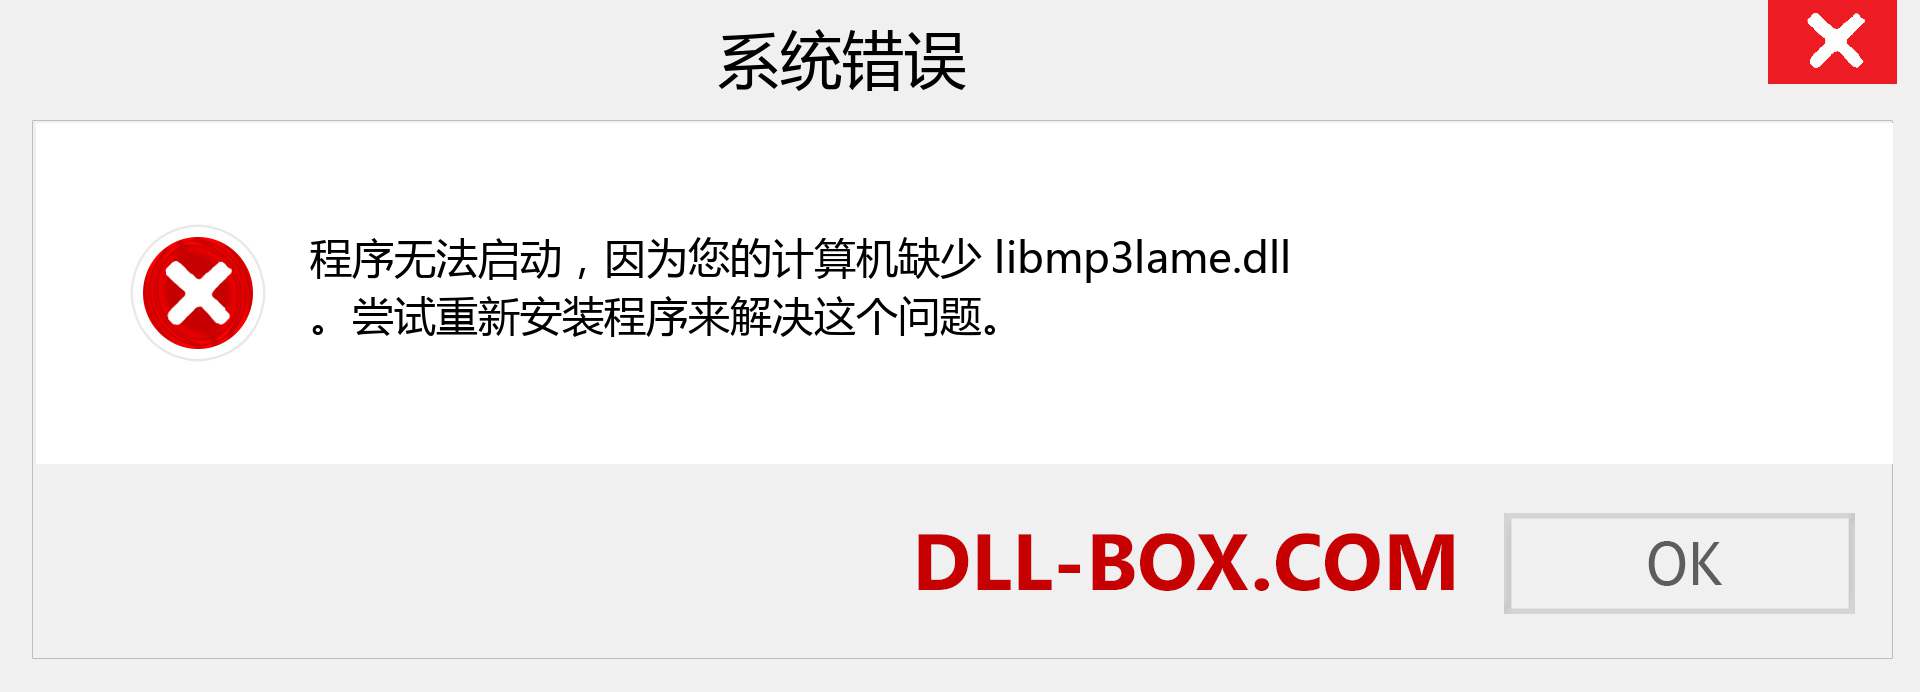 libmp3lame.dll 文件丢失？。 适用于 Windows 7、8、10 的下载 - 修复 Windows、照片、图像上的 libmp3lame dll 丢失错误